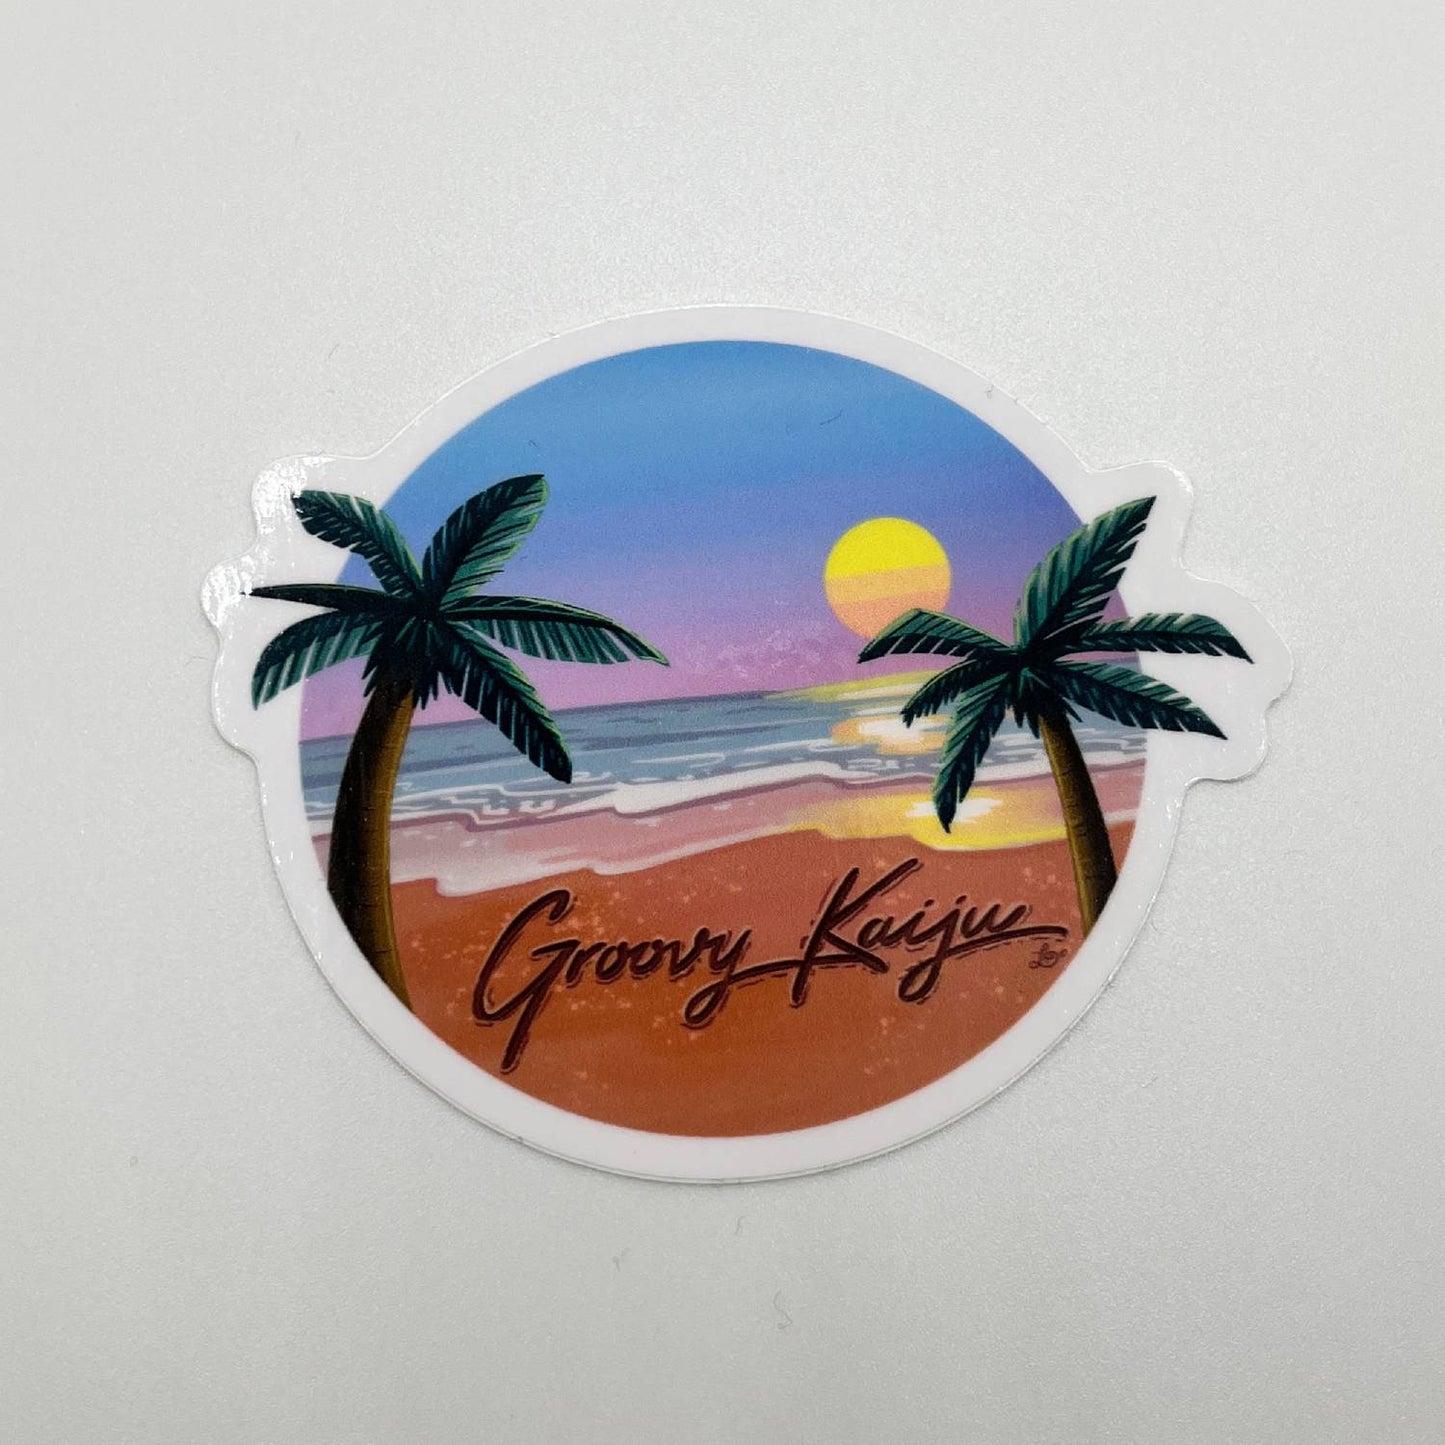 Groovy Kaiju - Variety Sticker Pack (5 Unique Stickers)